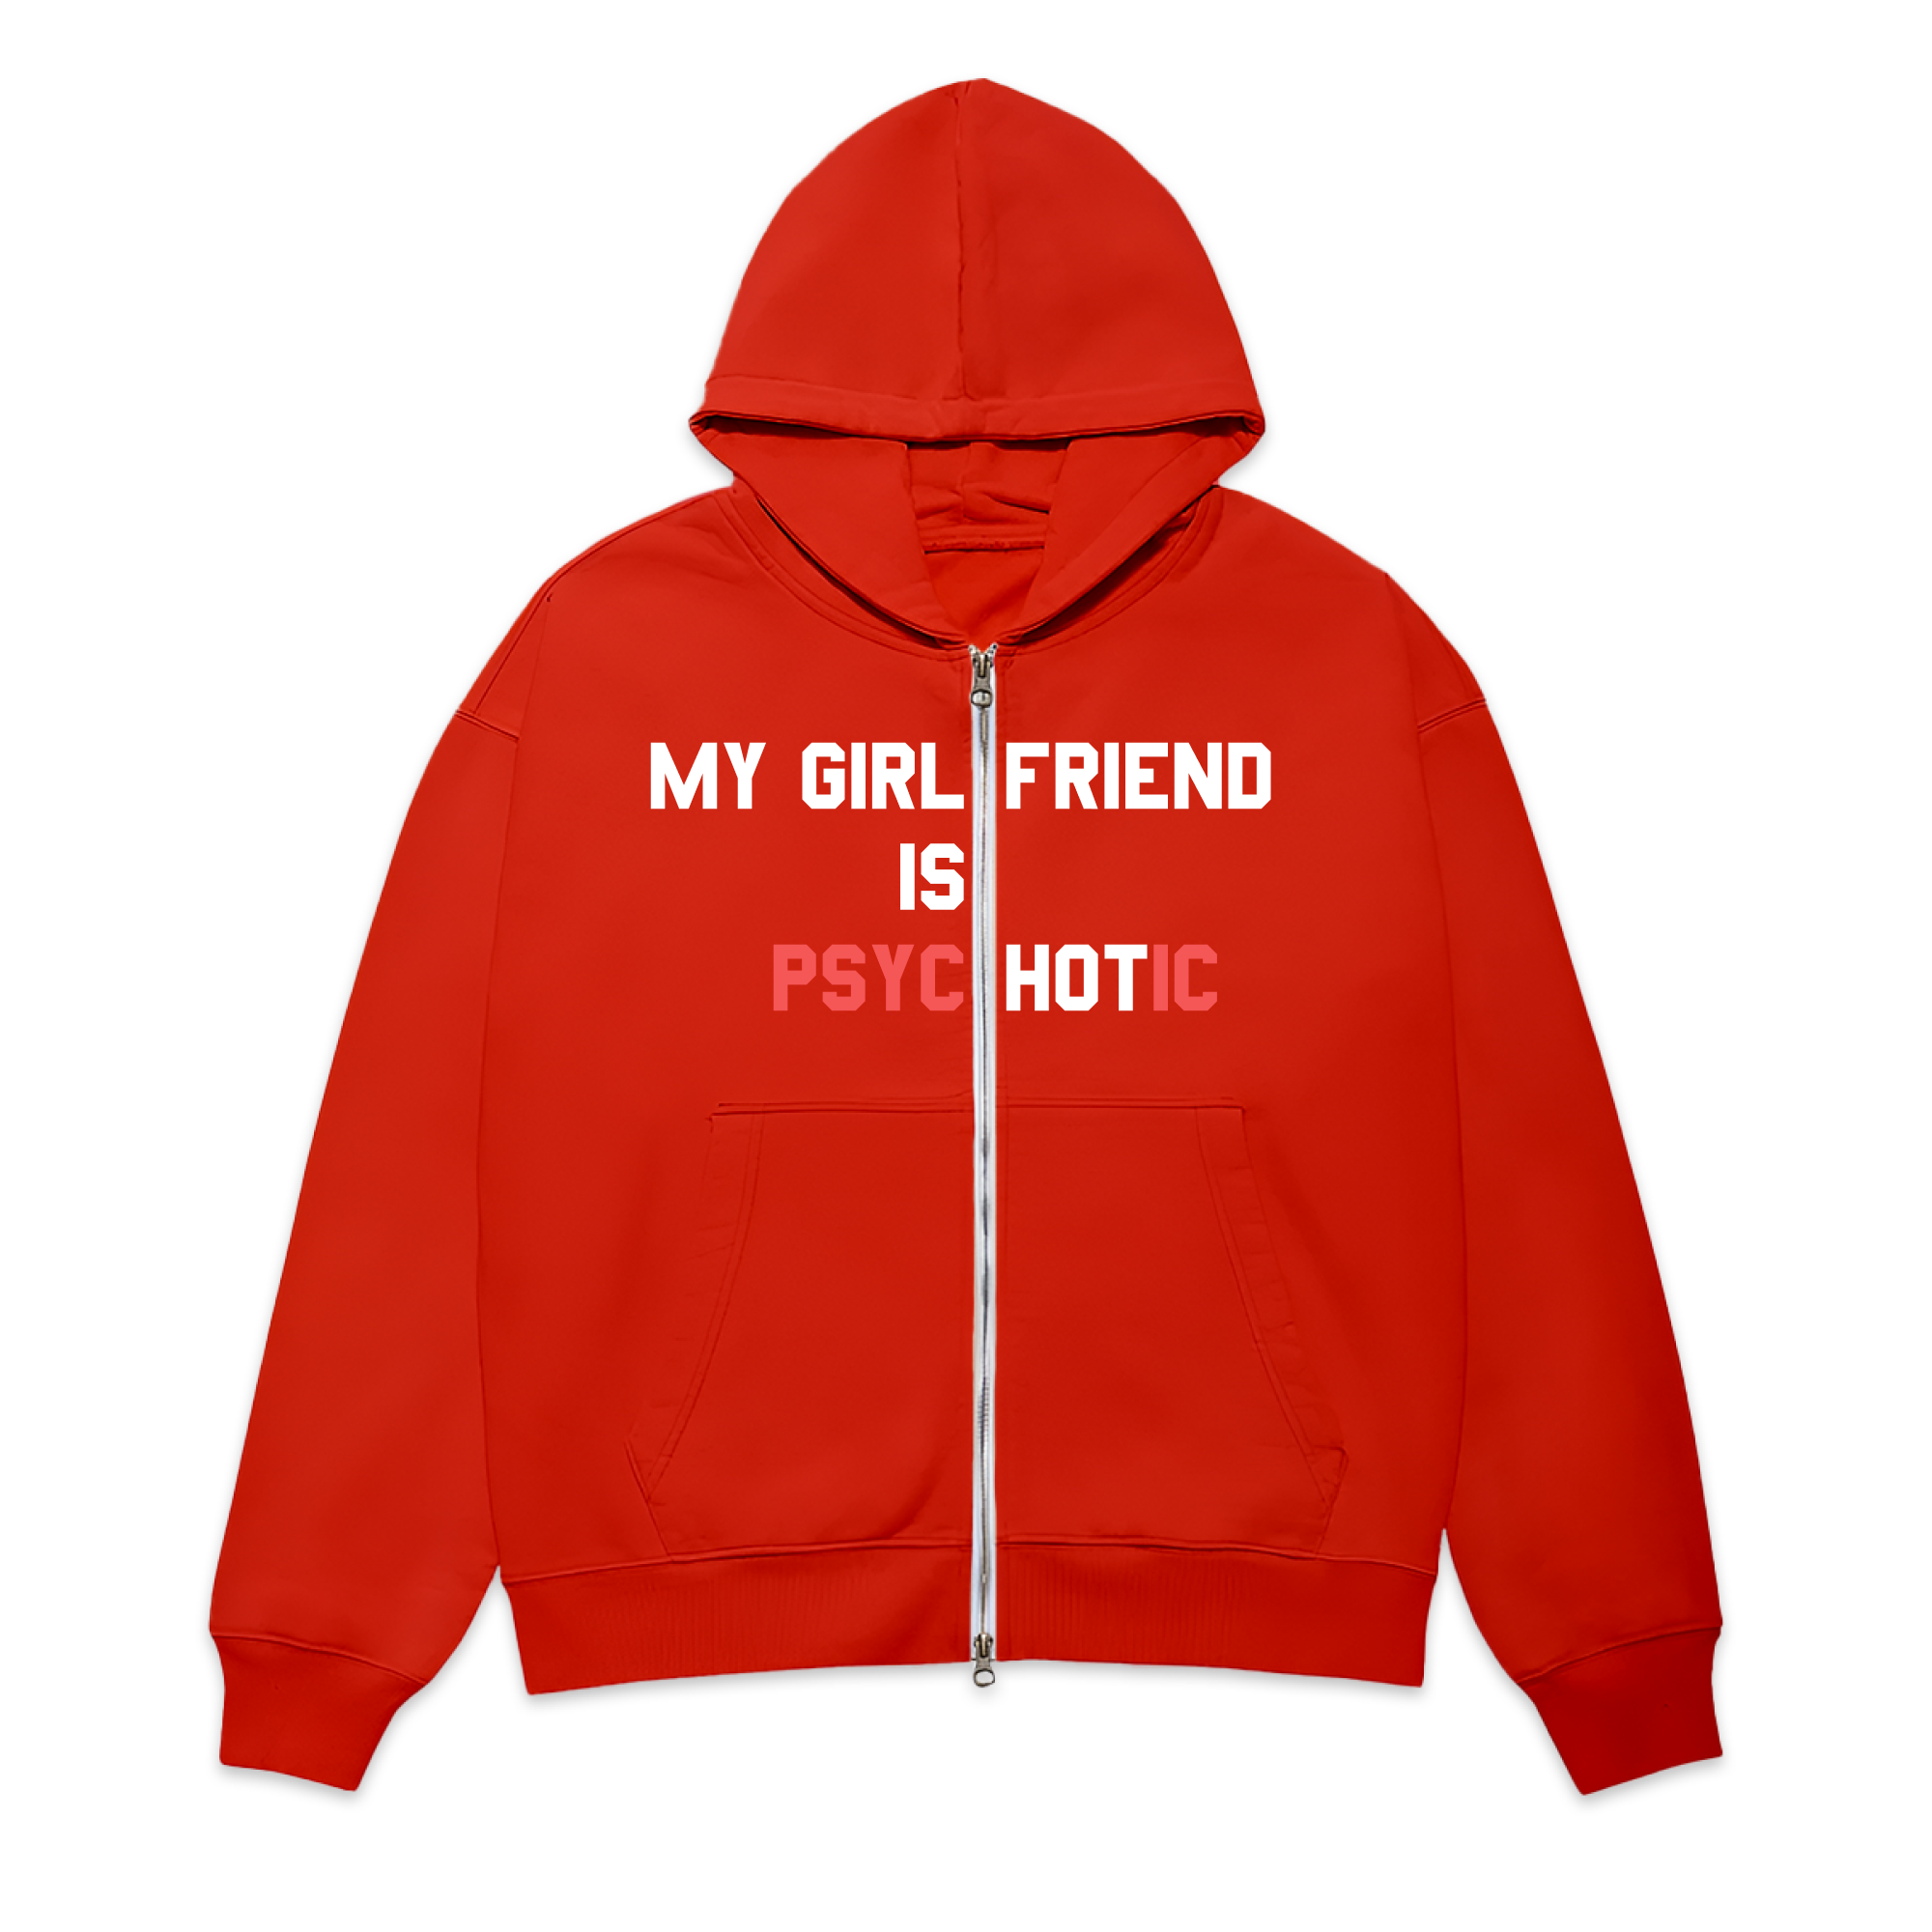 My Girlfriend Is Psychotic Zip-Up Hoodie Sweatshirt